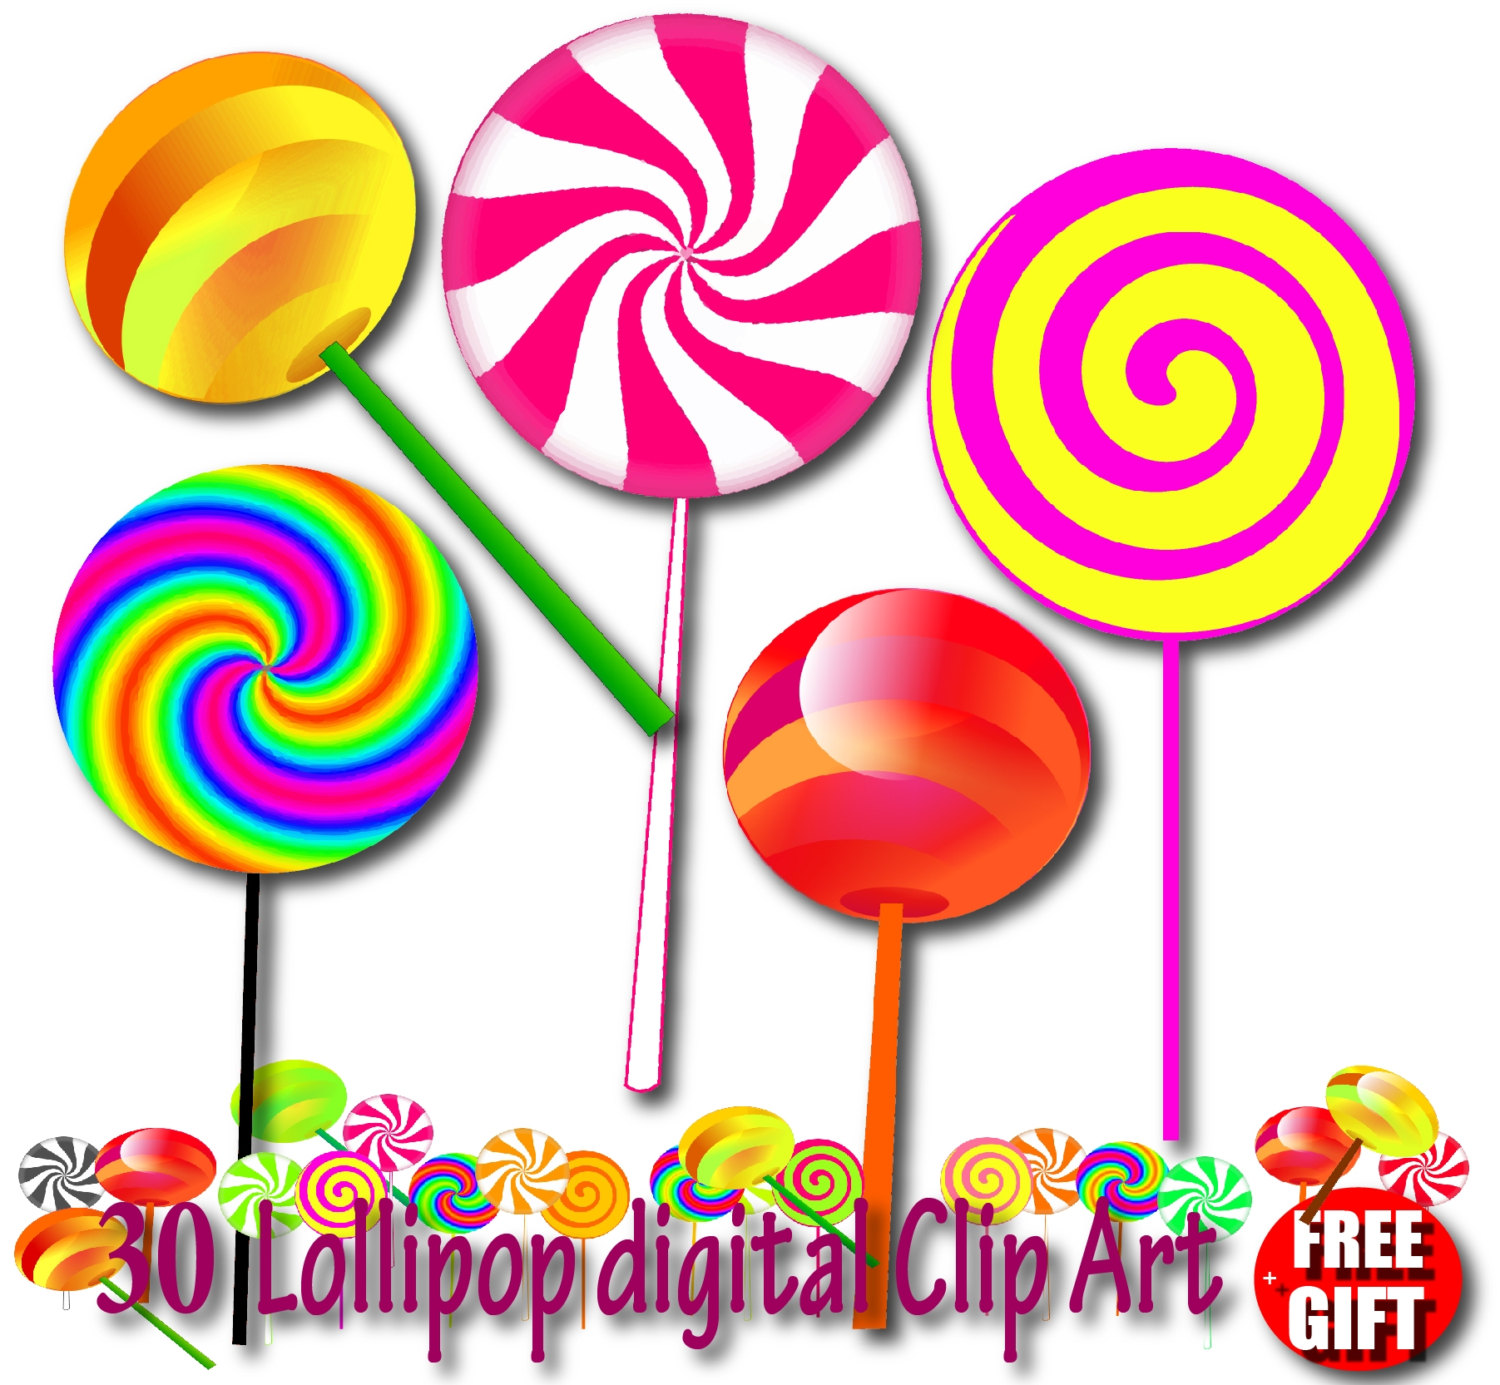 Candyland clipart lollipop. Chocolate invitation candy lollipops